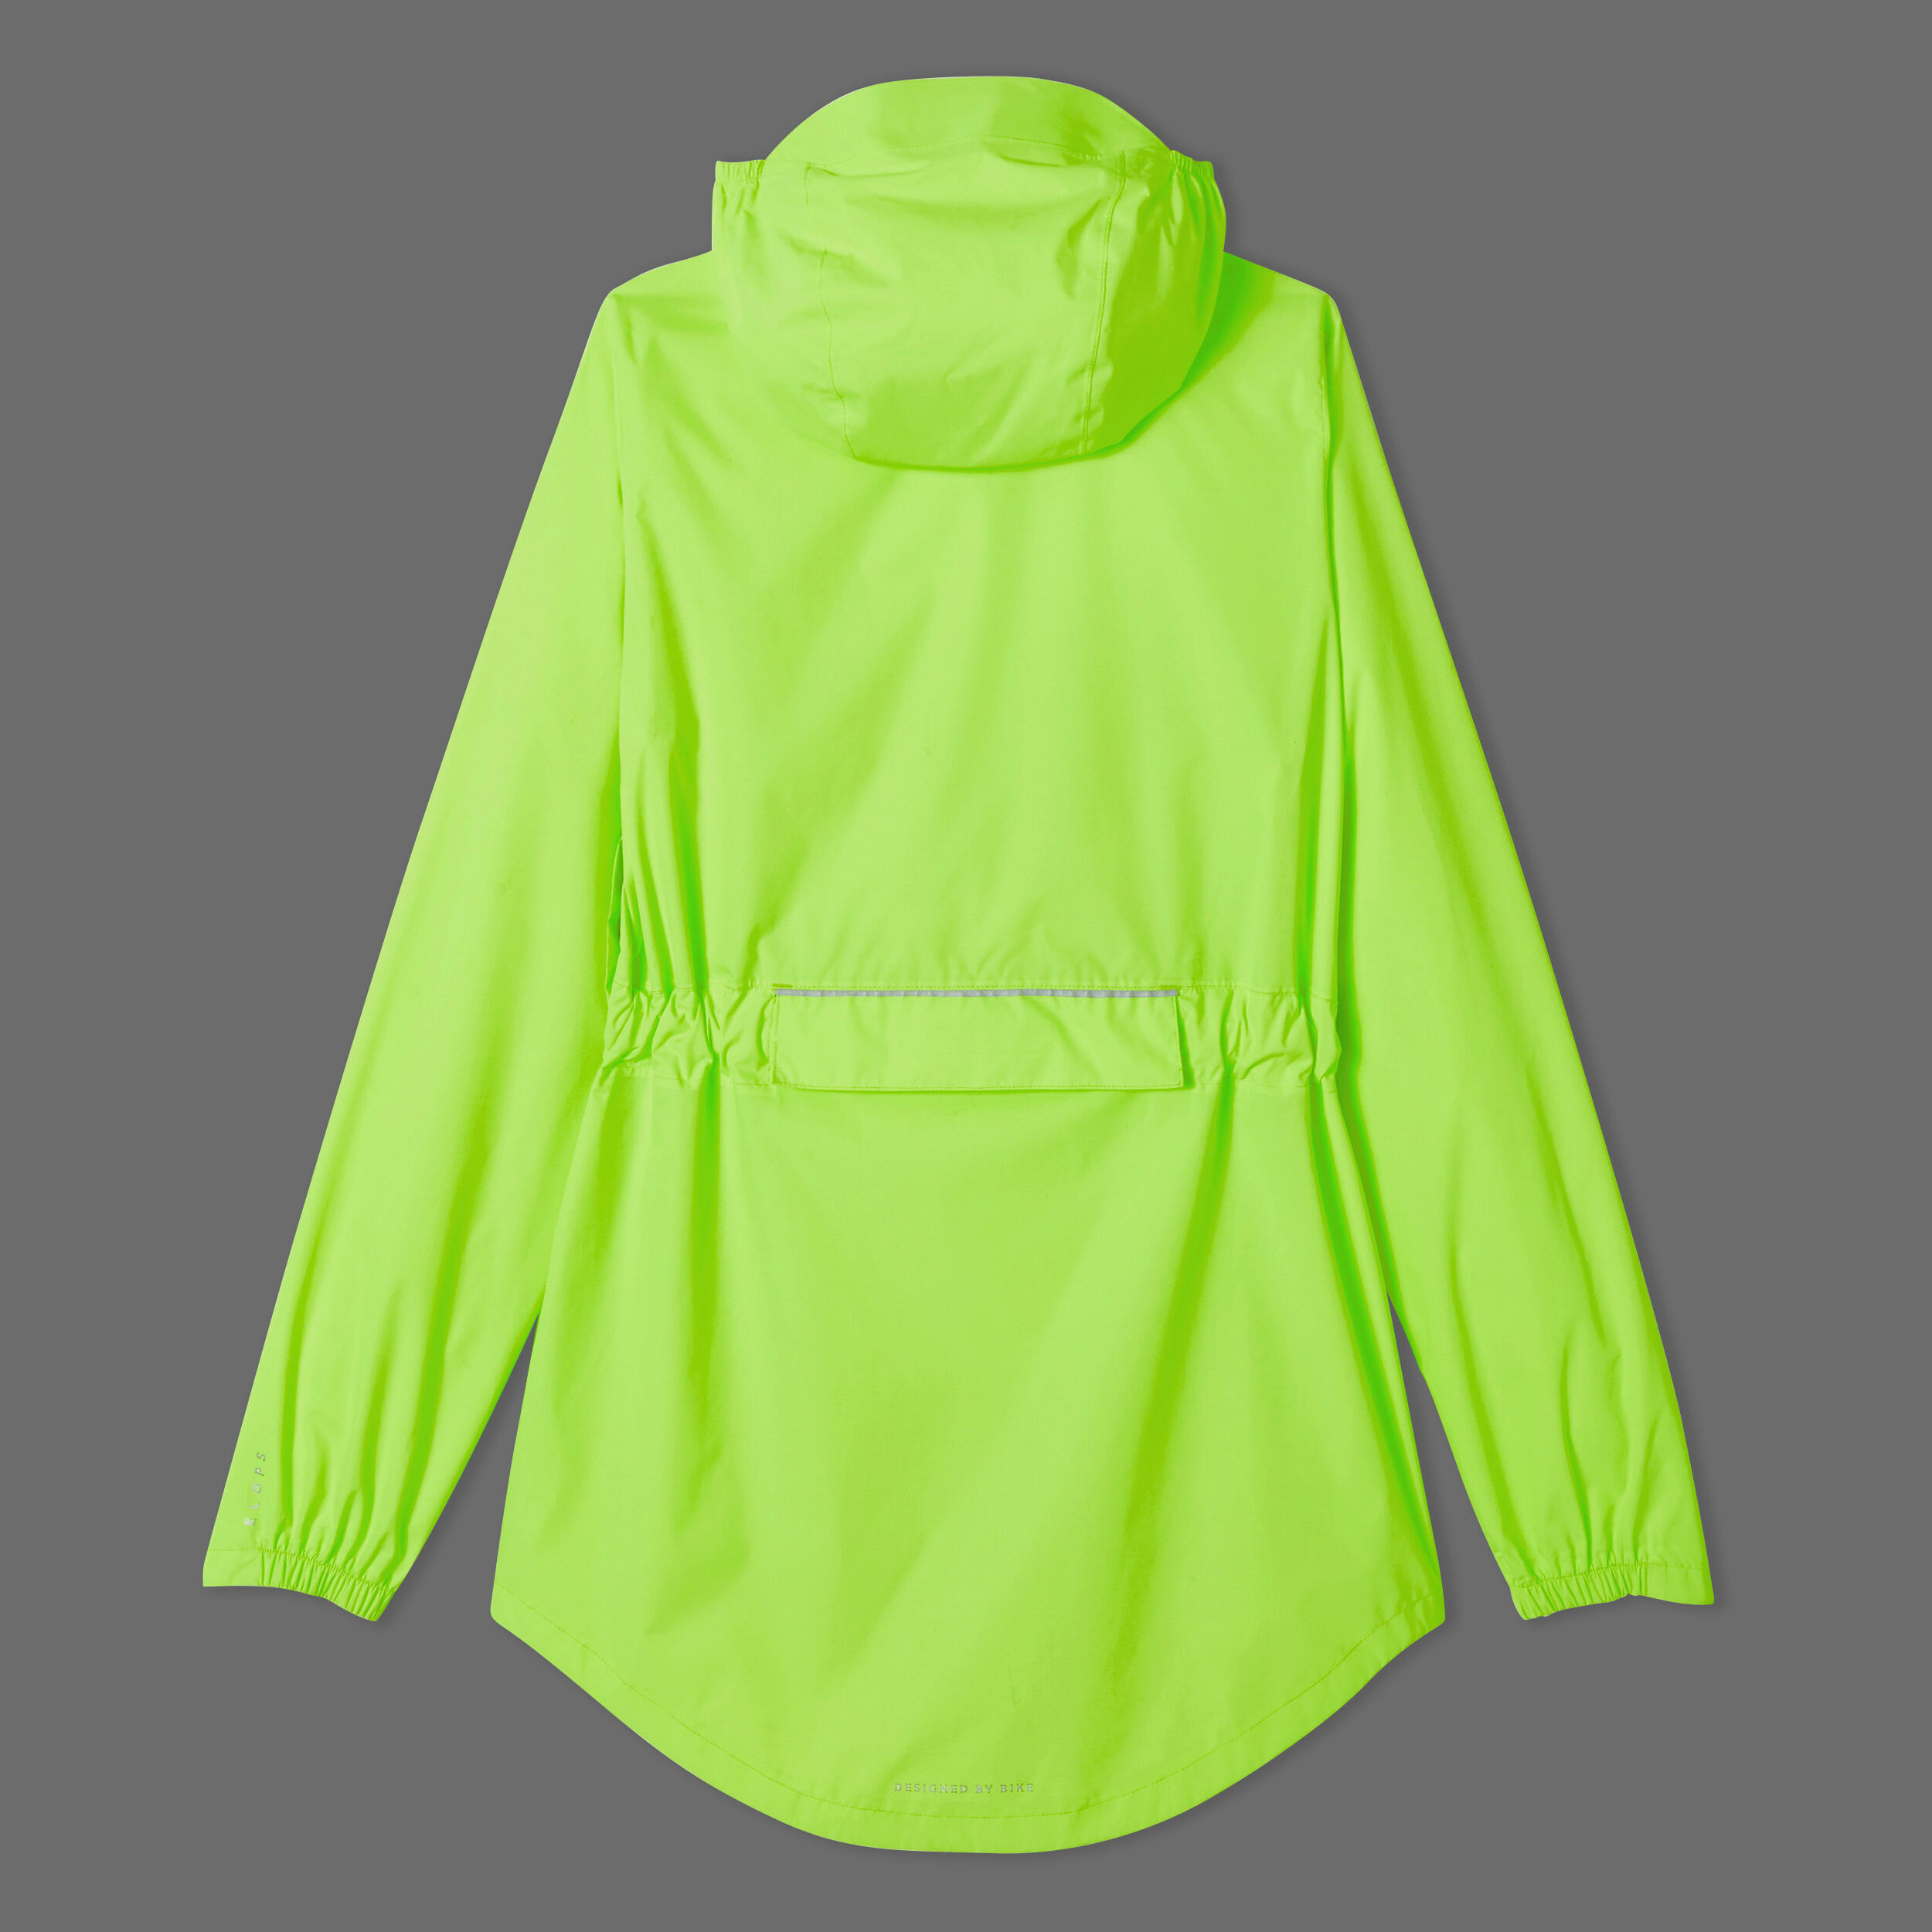 Women's Waterproof Urban Cycling Jacket - Neon Yellow 4/39